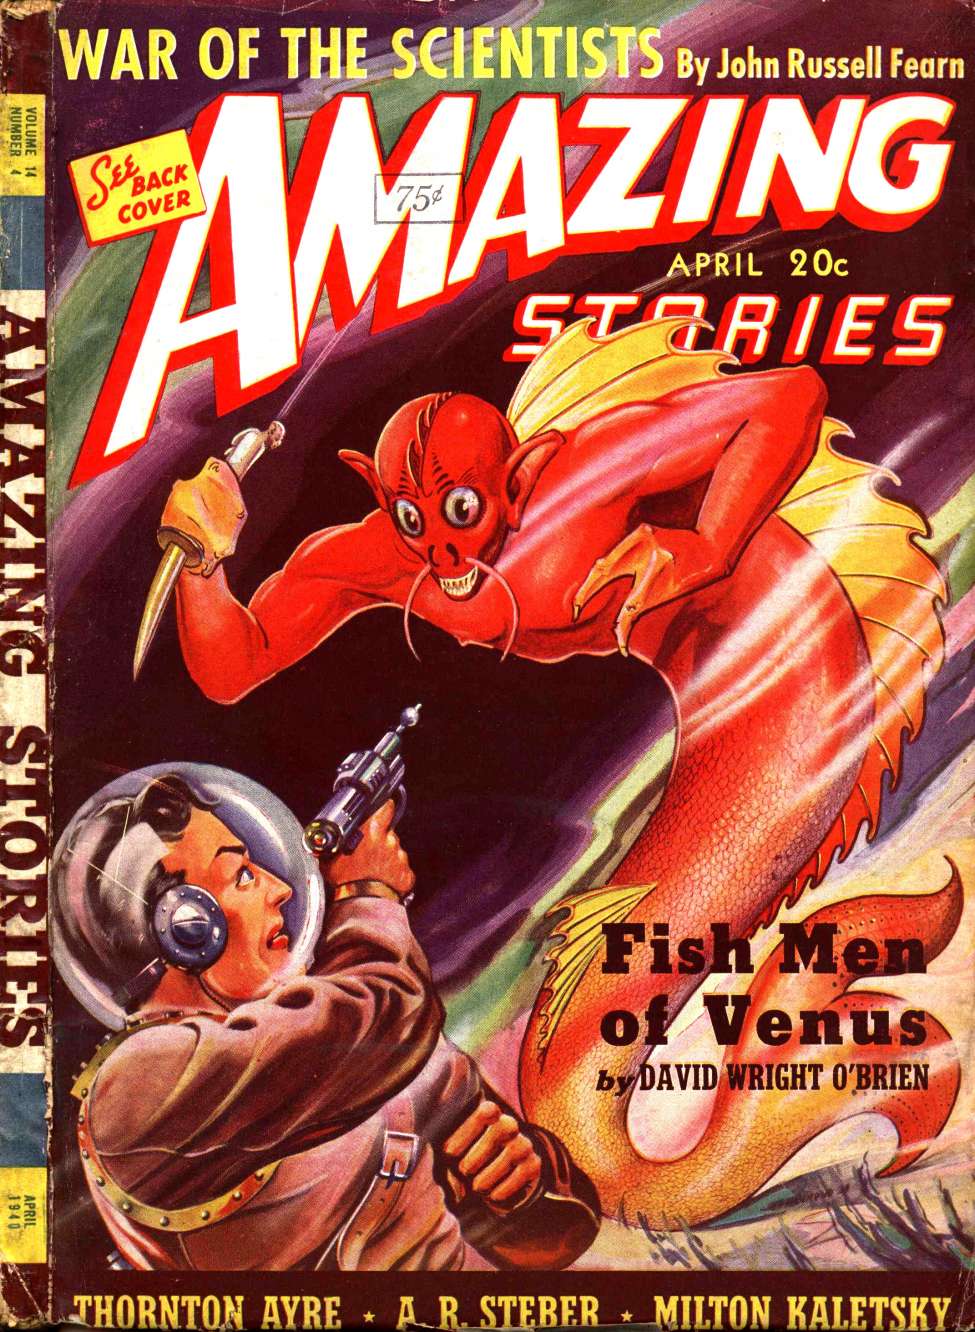 Comic Book Cover For Amazing Stories v14 4 - Fish Men of Venus - David Wright O'Brien